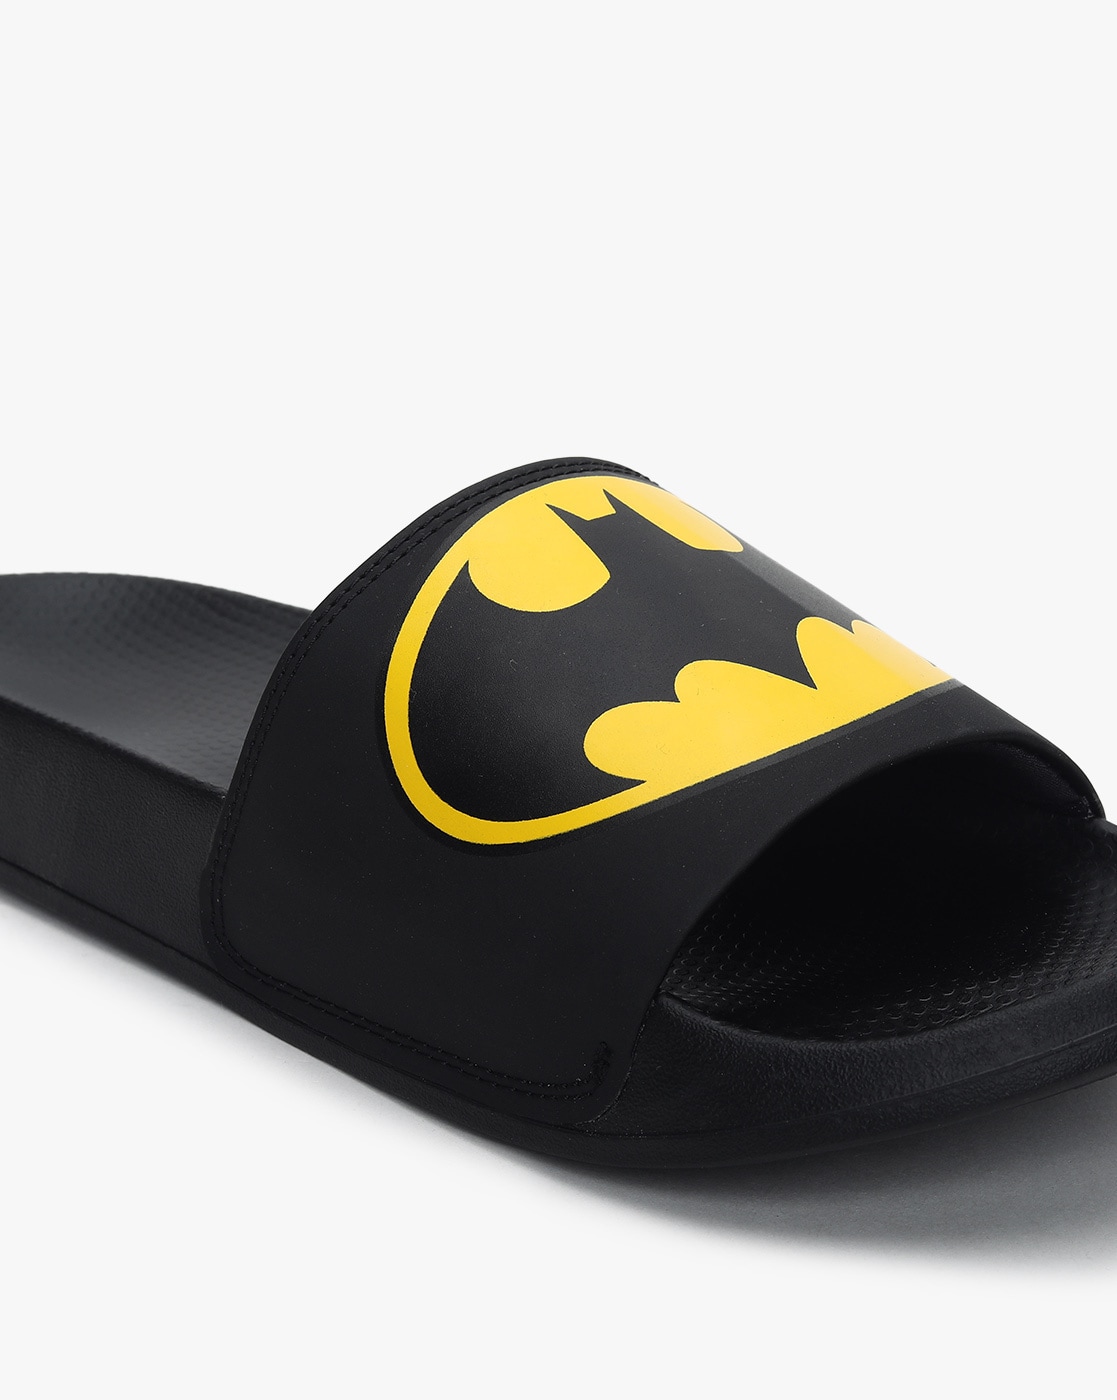 House Slippers Batman Velcro Dark grey - buy, price, reviews in Estonia |  sellme.ee